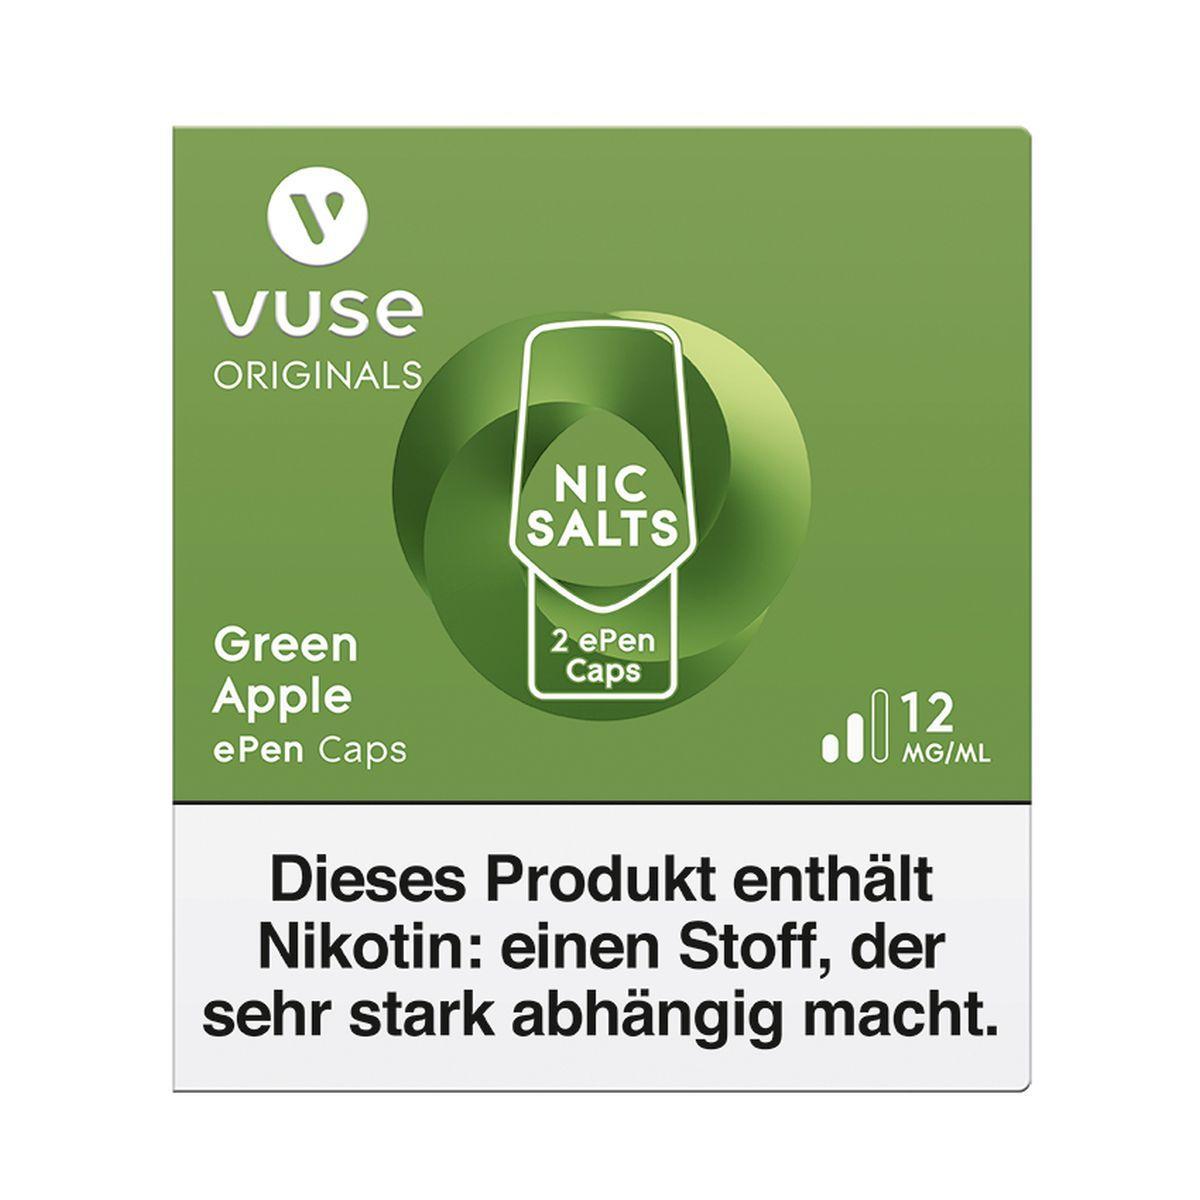 Vuse ePen Caps Green Apple 12mg Nic Salt